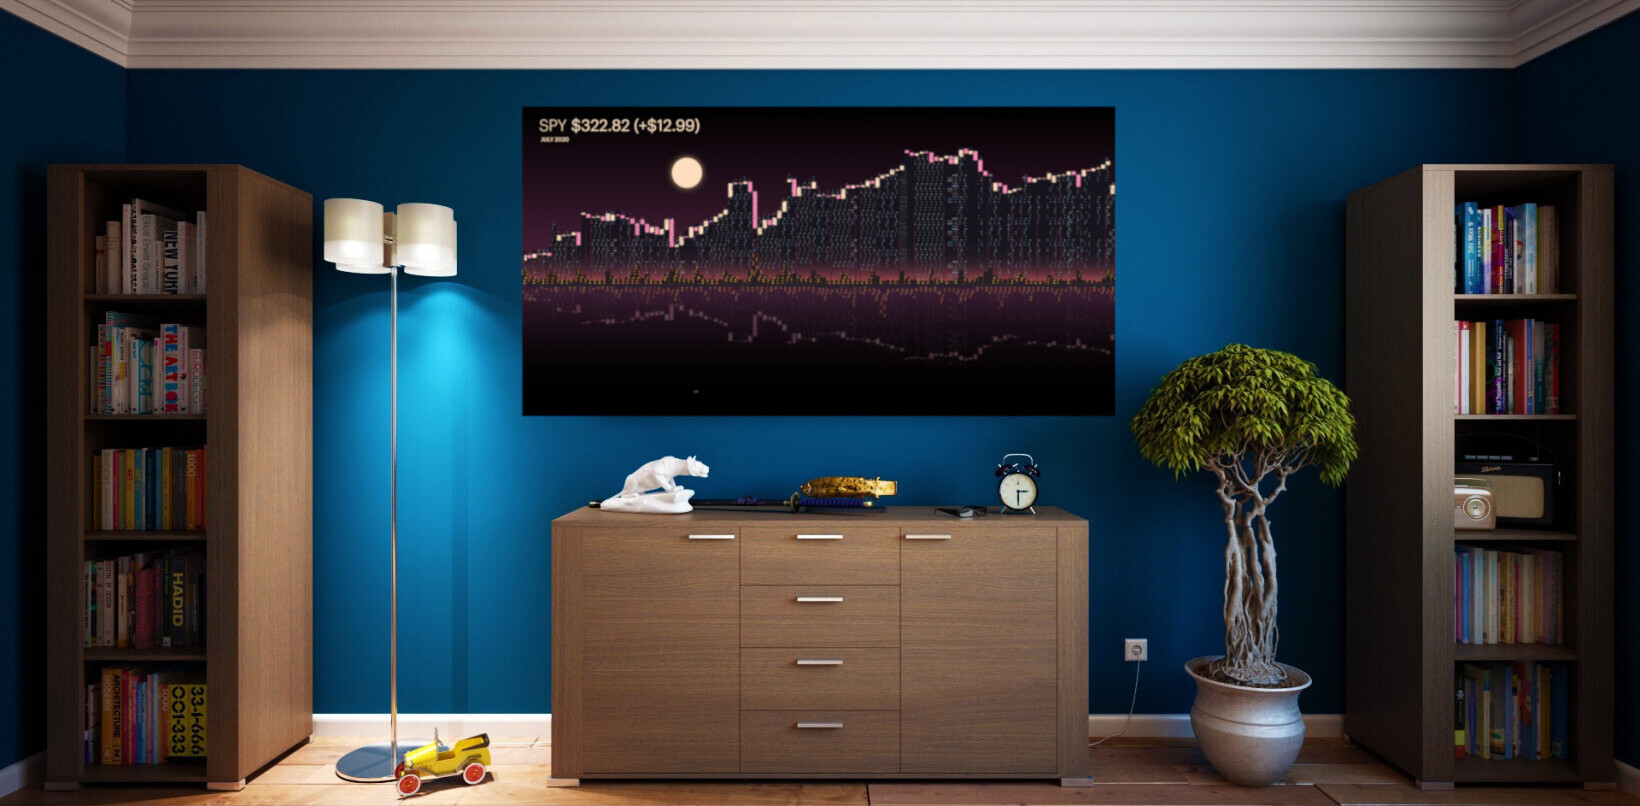 This artist turns boring stock market data into gorgeous minimalist art